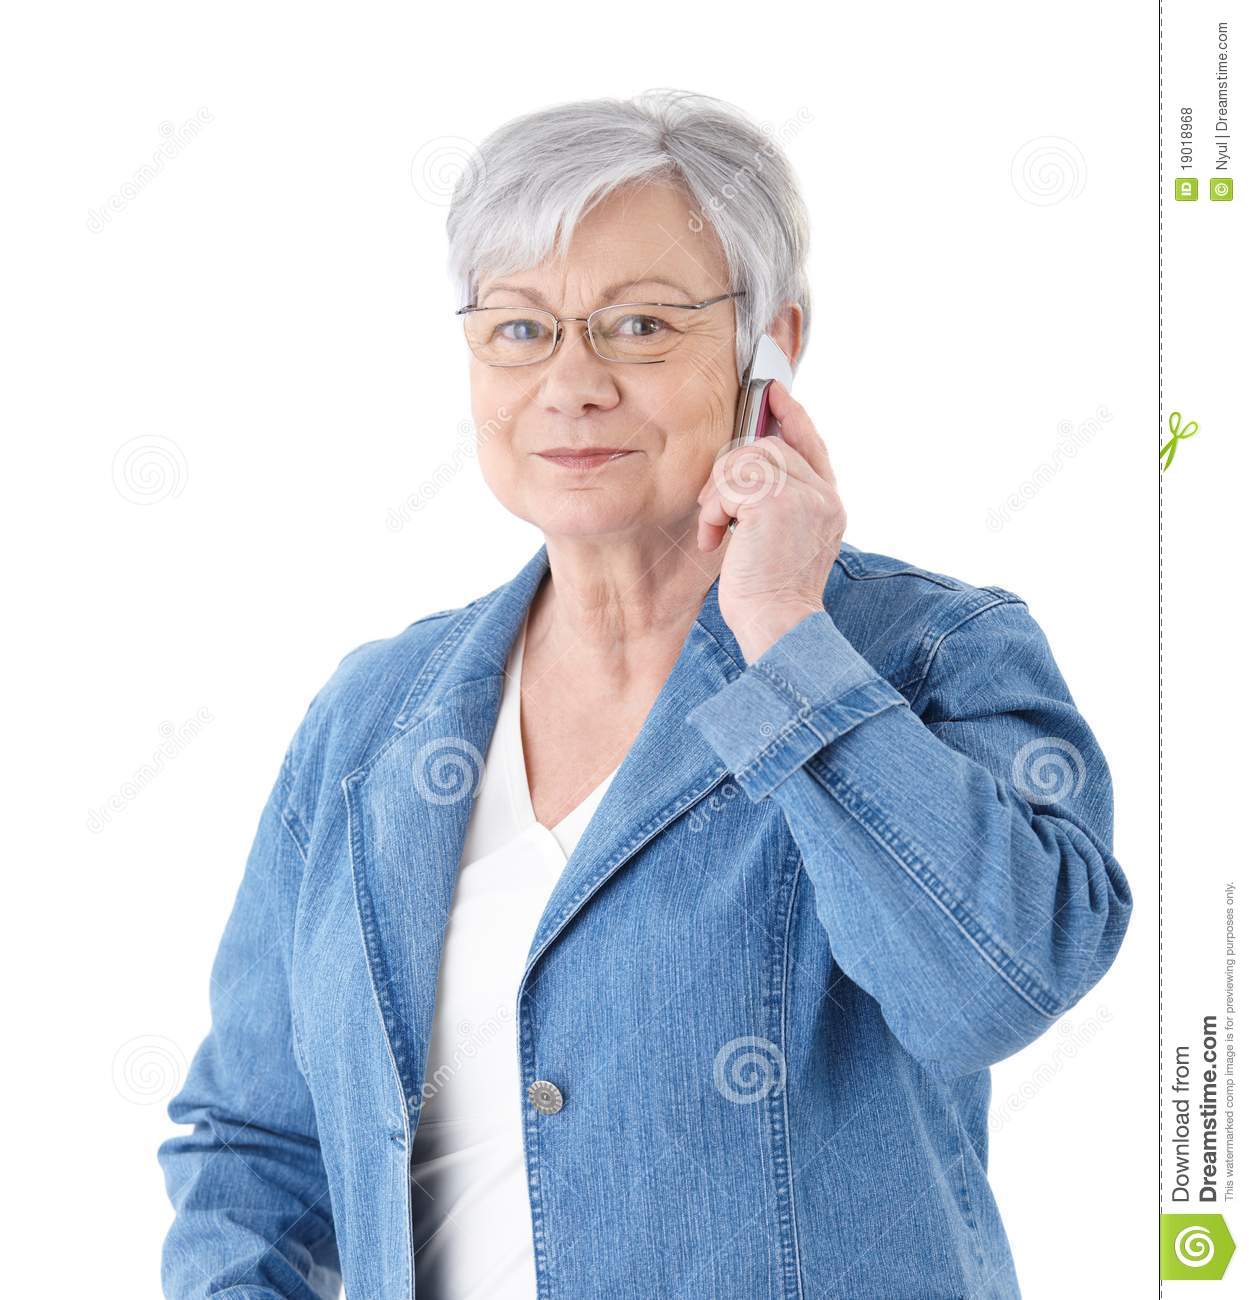 Modern Senior Lady On Mobile Phone Royalty Free Stock Photos   Image